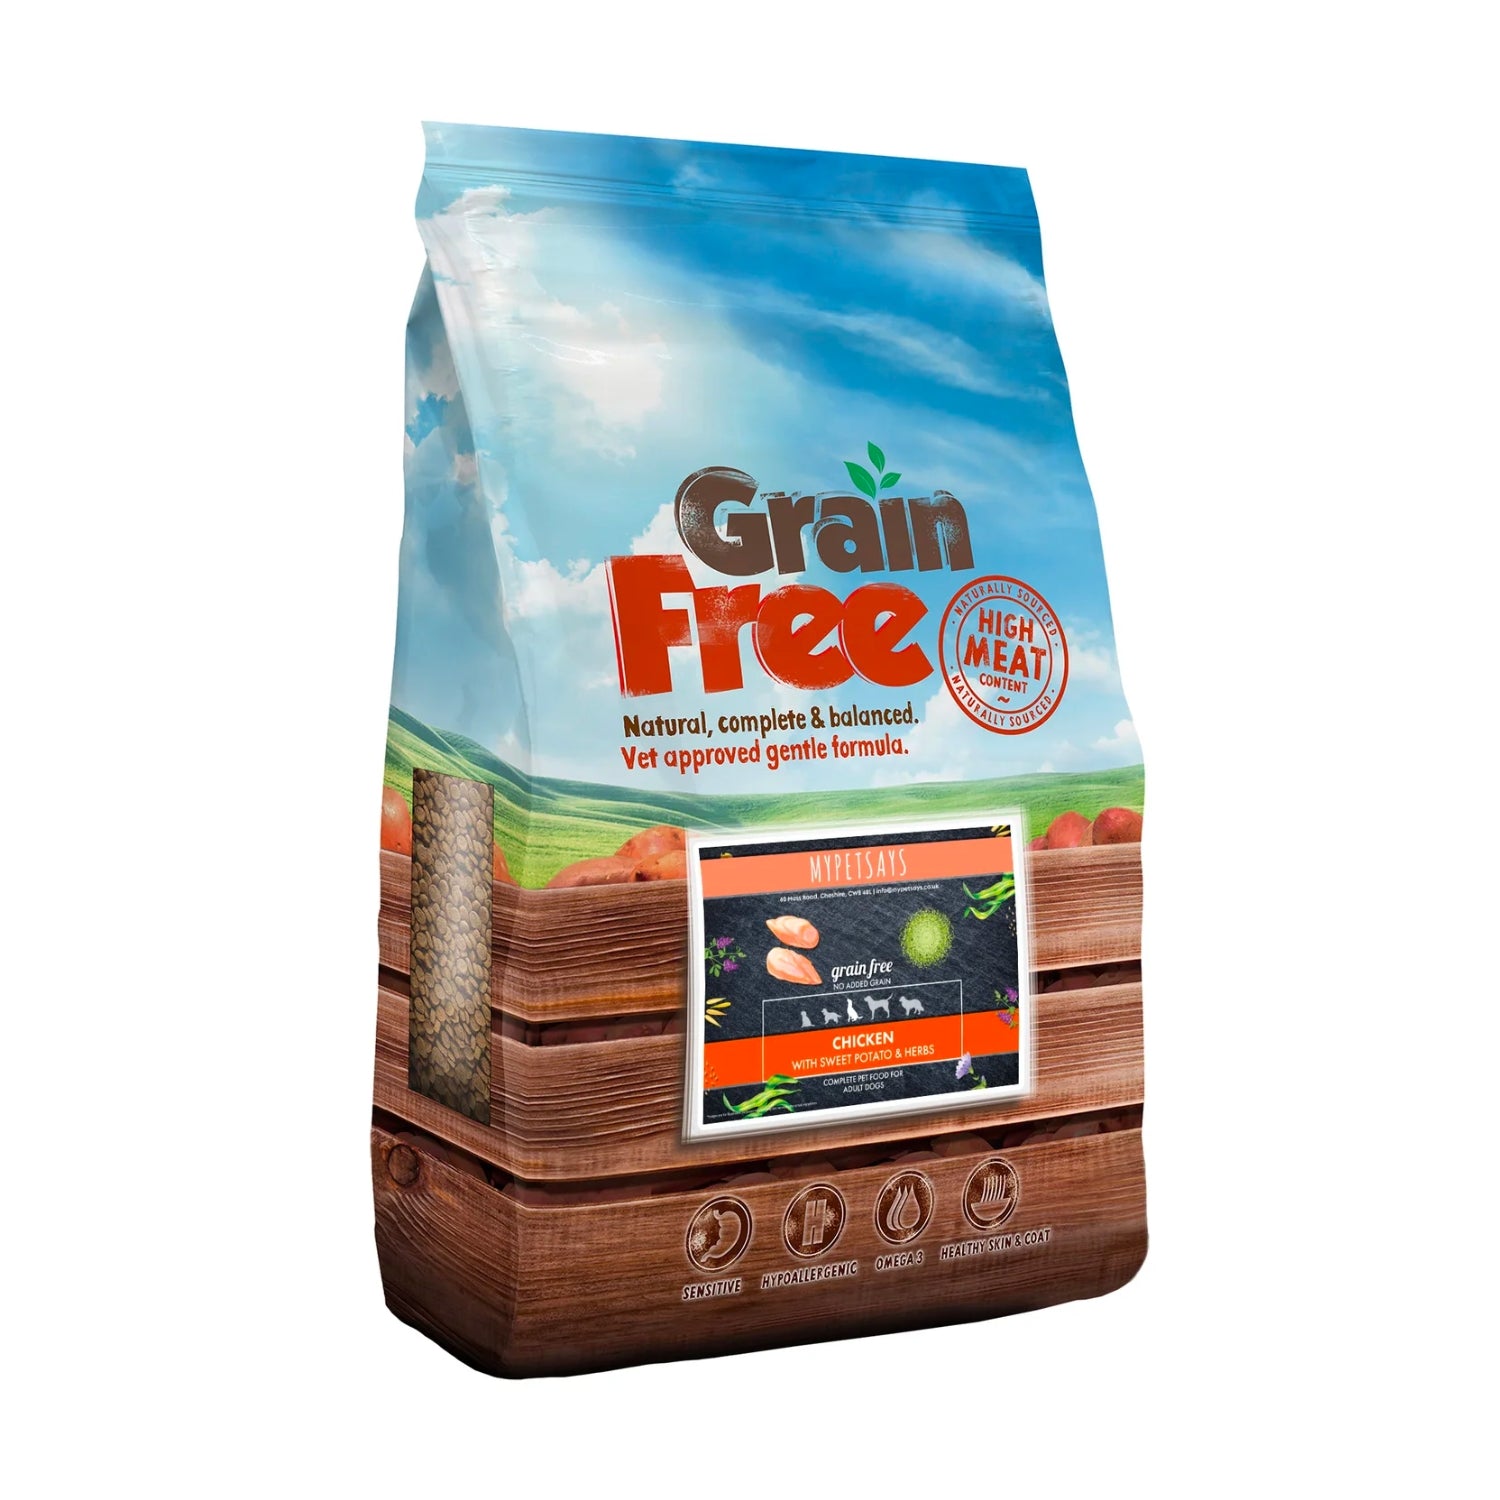 Grain Free Dog Food - Chicken, Sweet Potato & Herbs